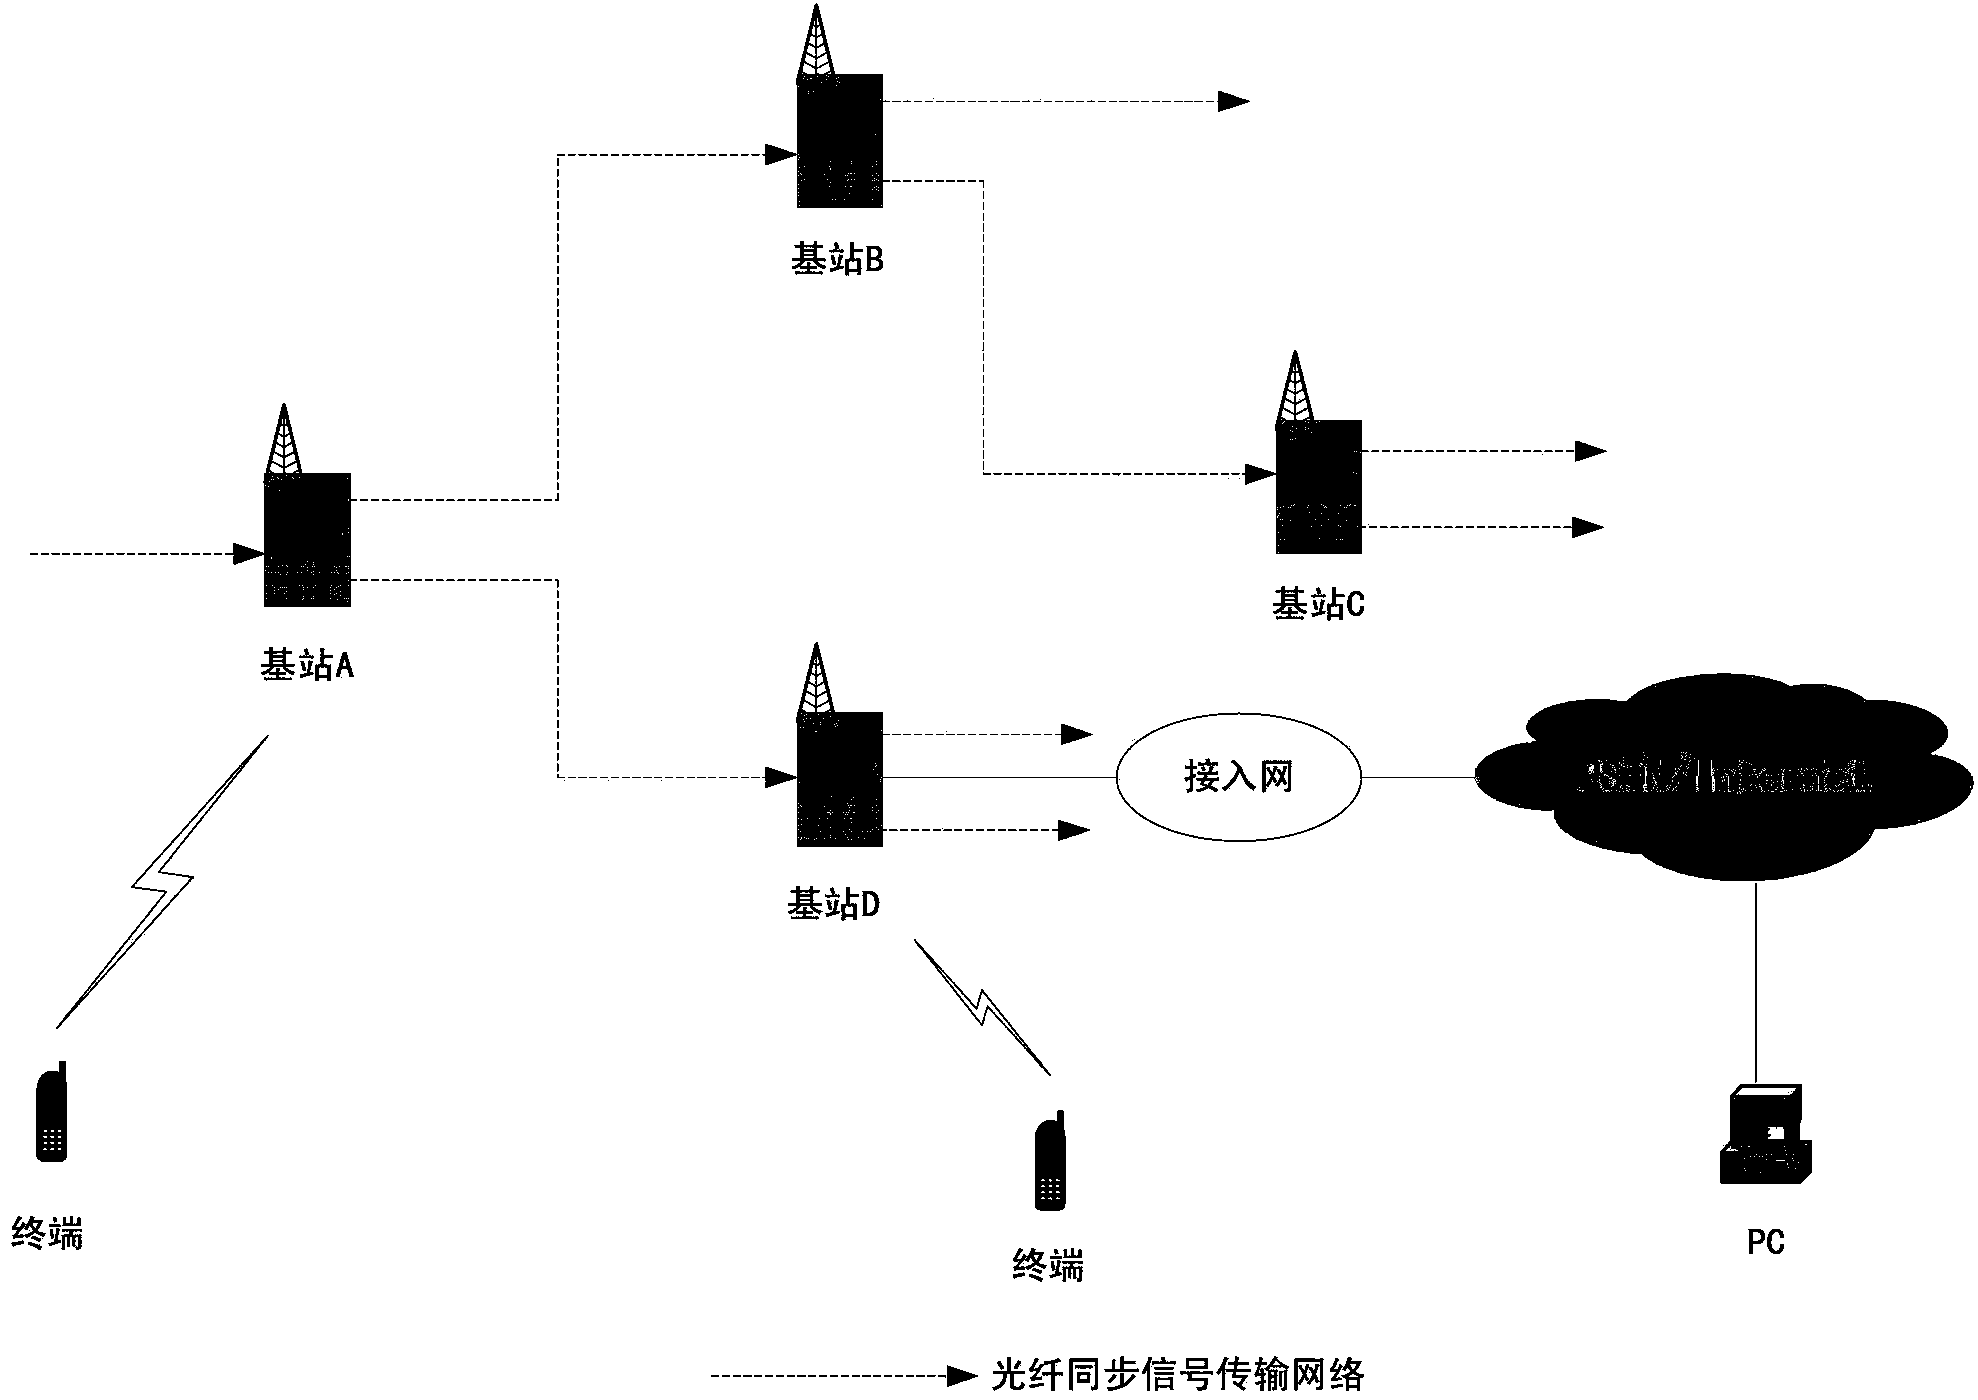 Base station clock synchronization method in communication network